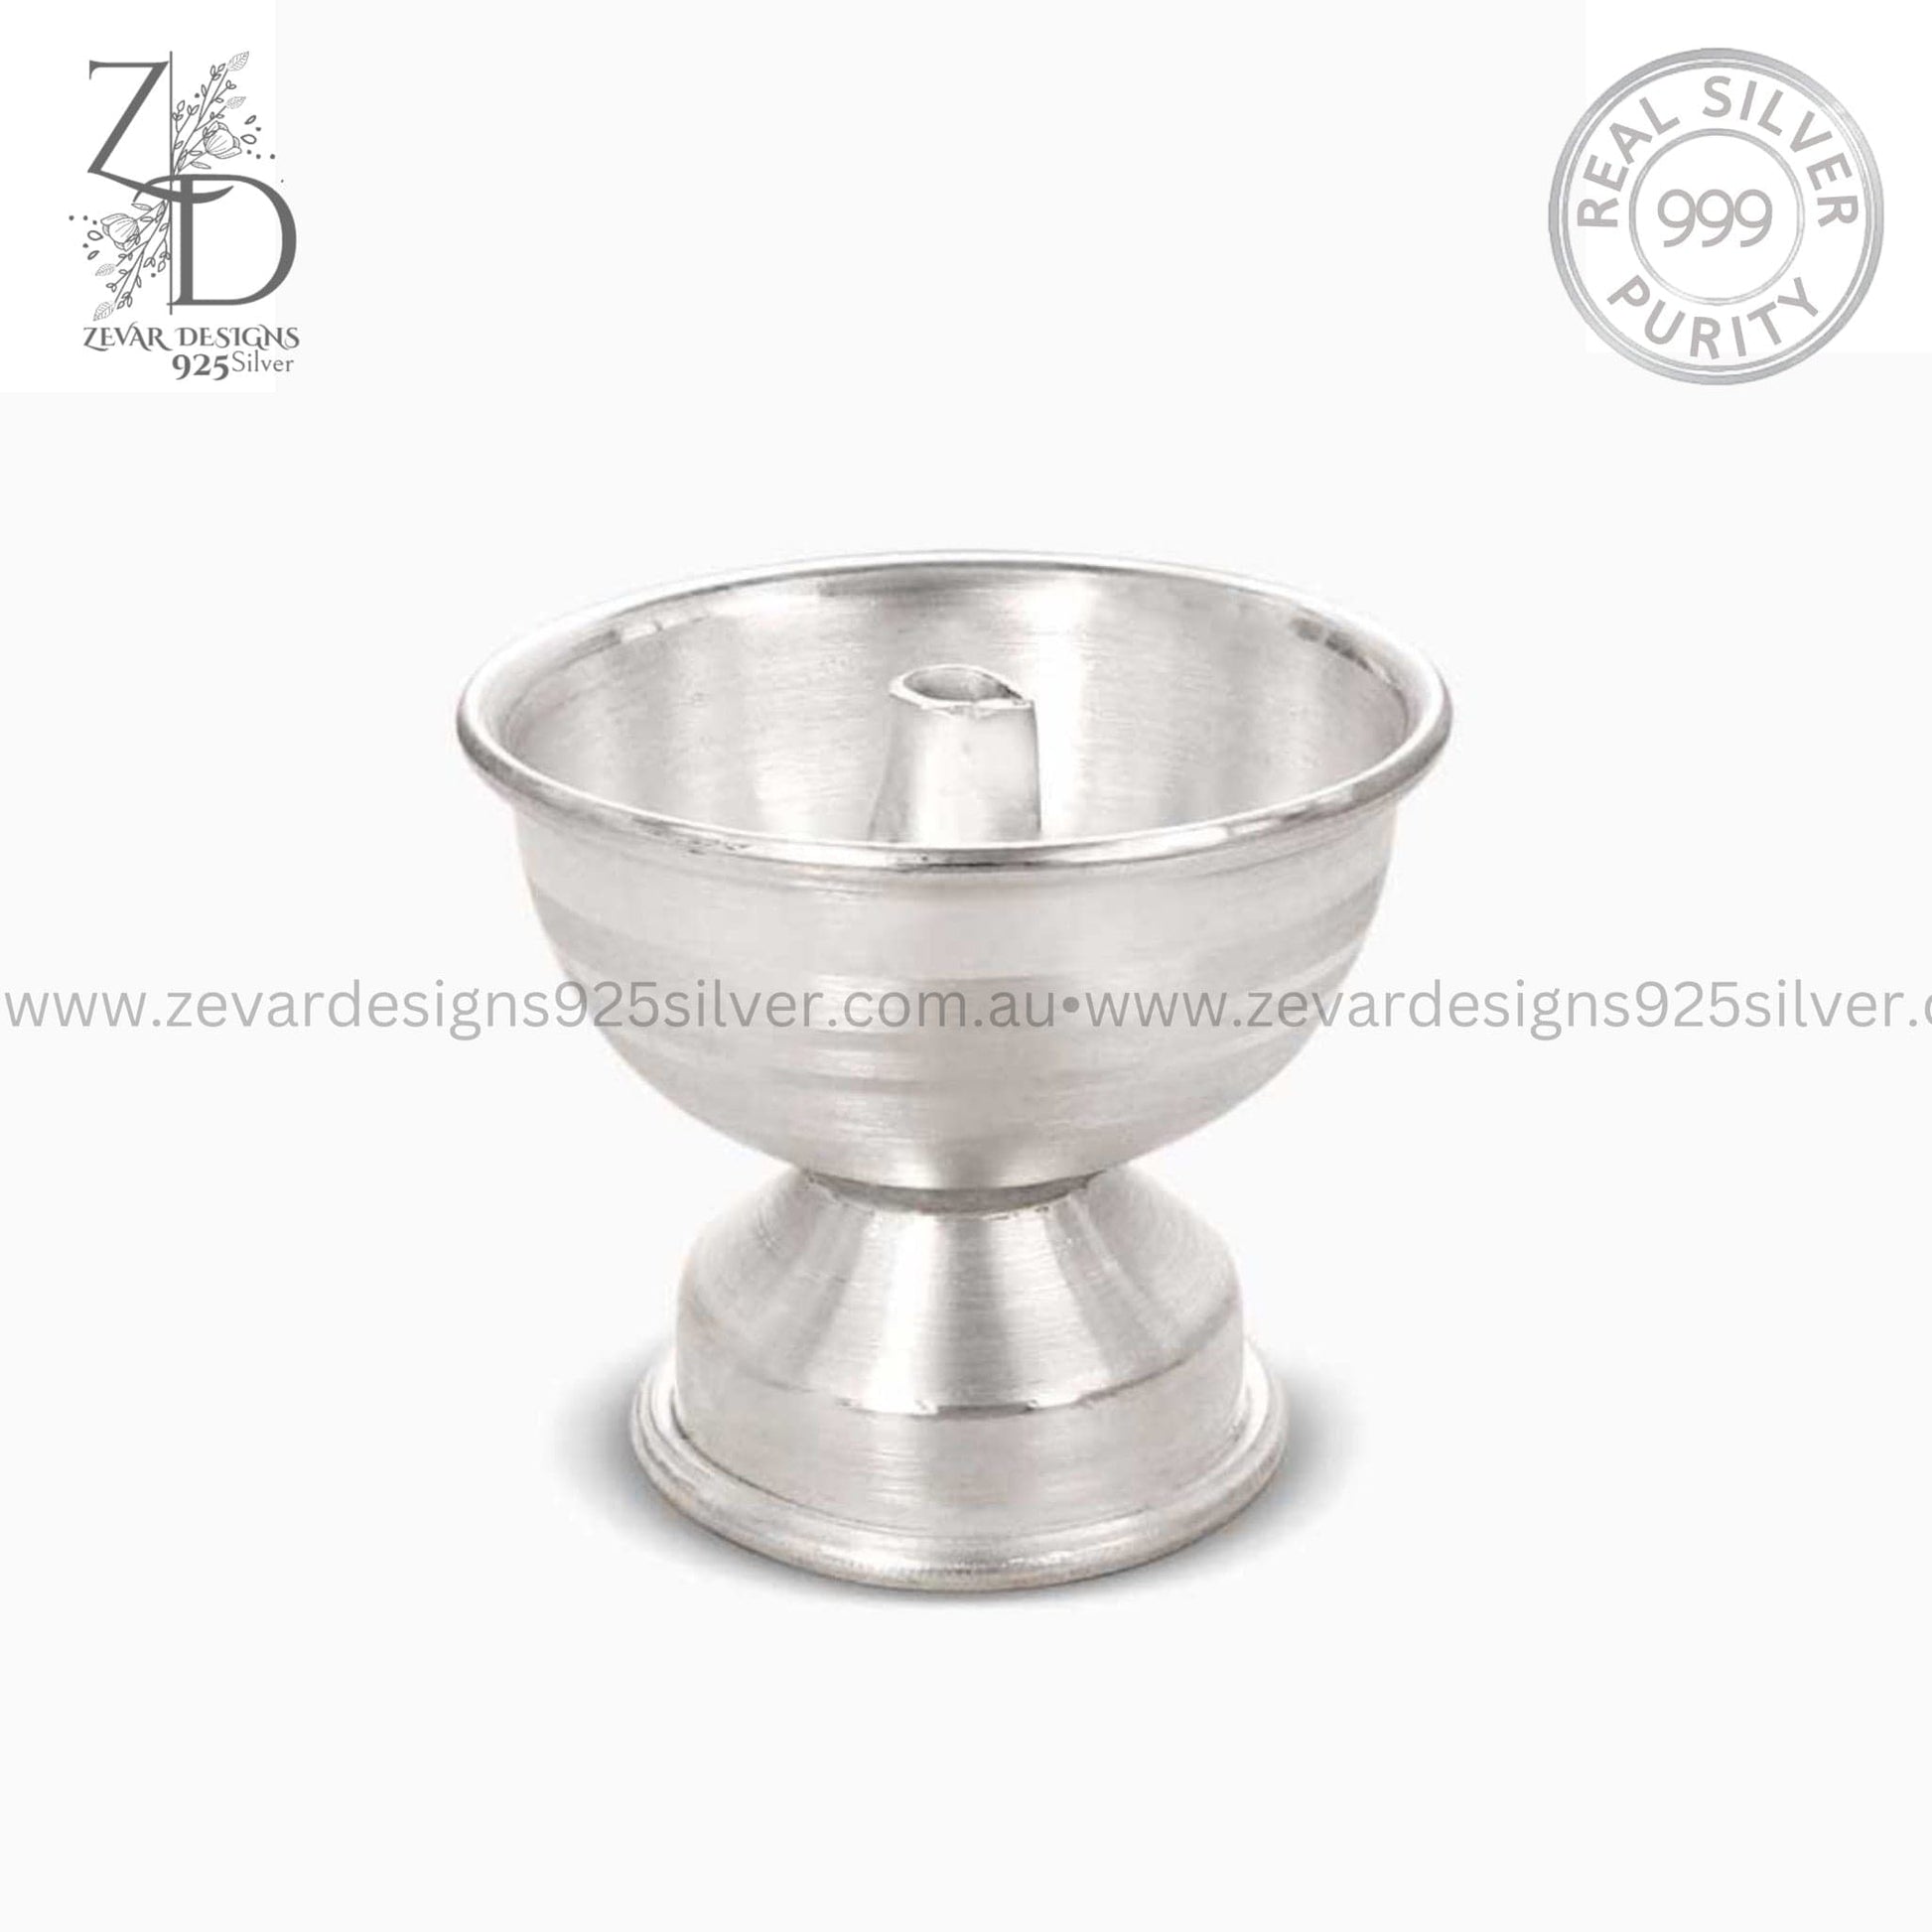 Zevar Designs 925 Silver utensil Silver Pooja Diya / Lamp - 999 Pure Silver